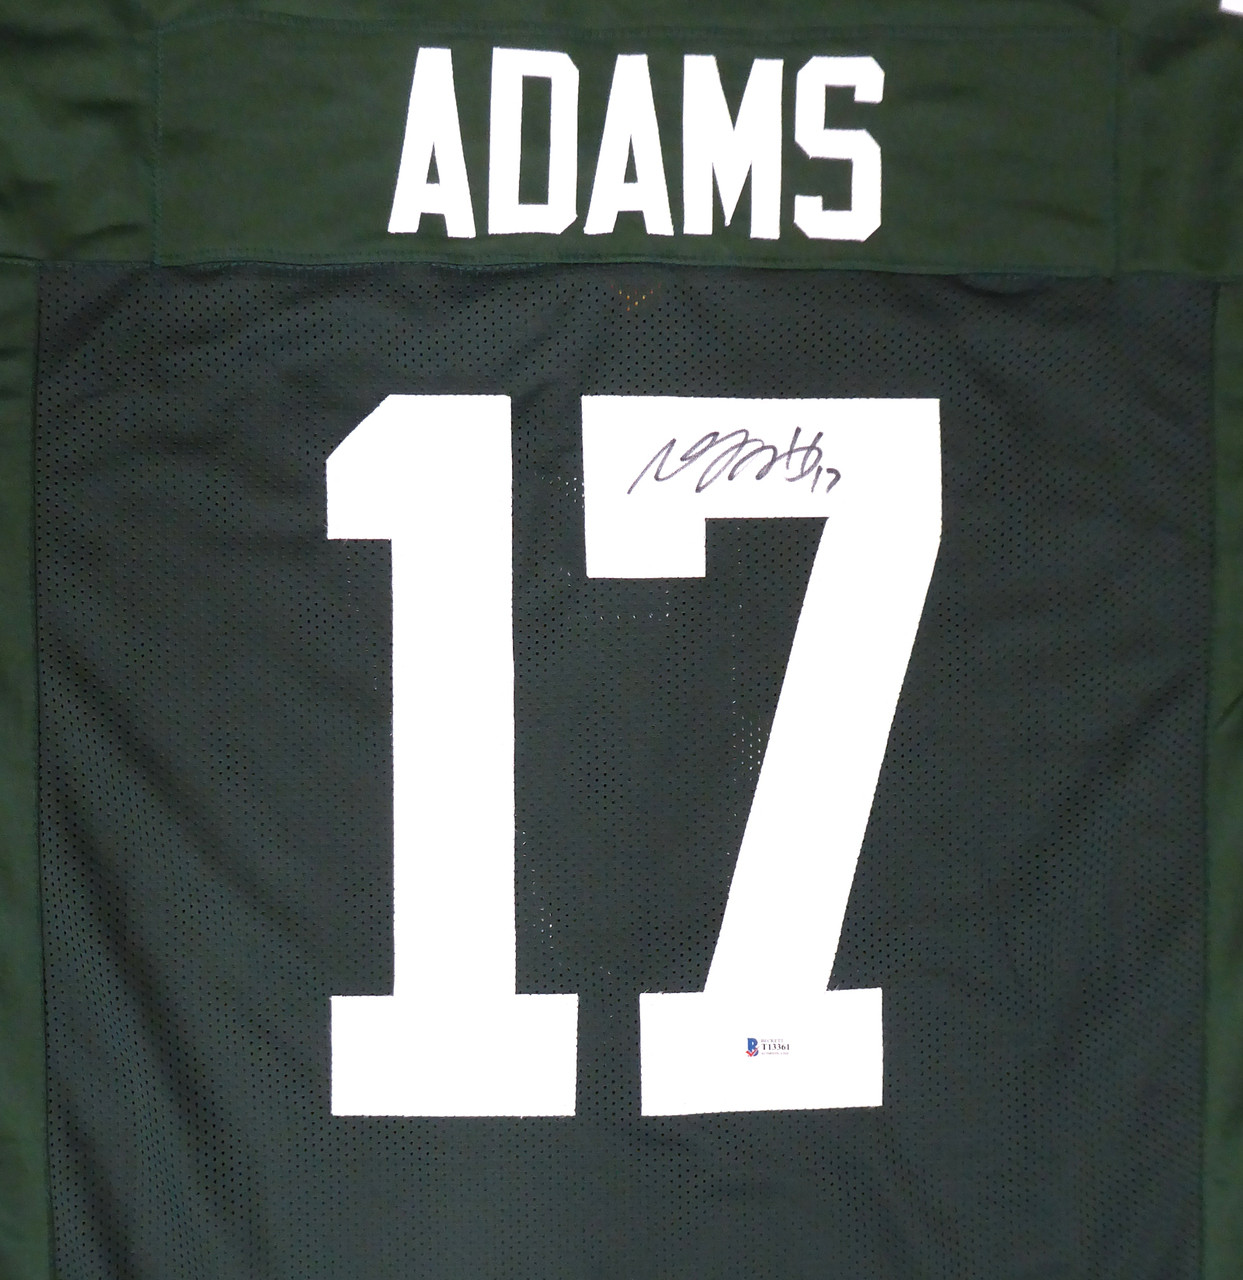 davante adams stitched jersey